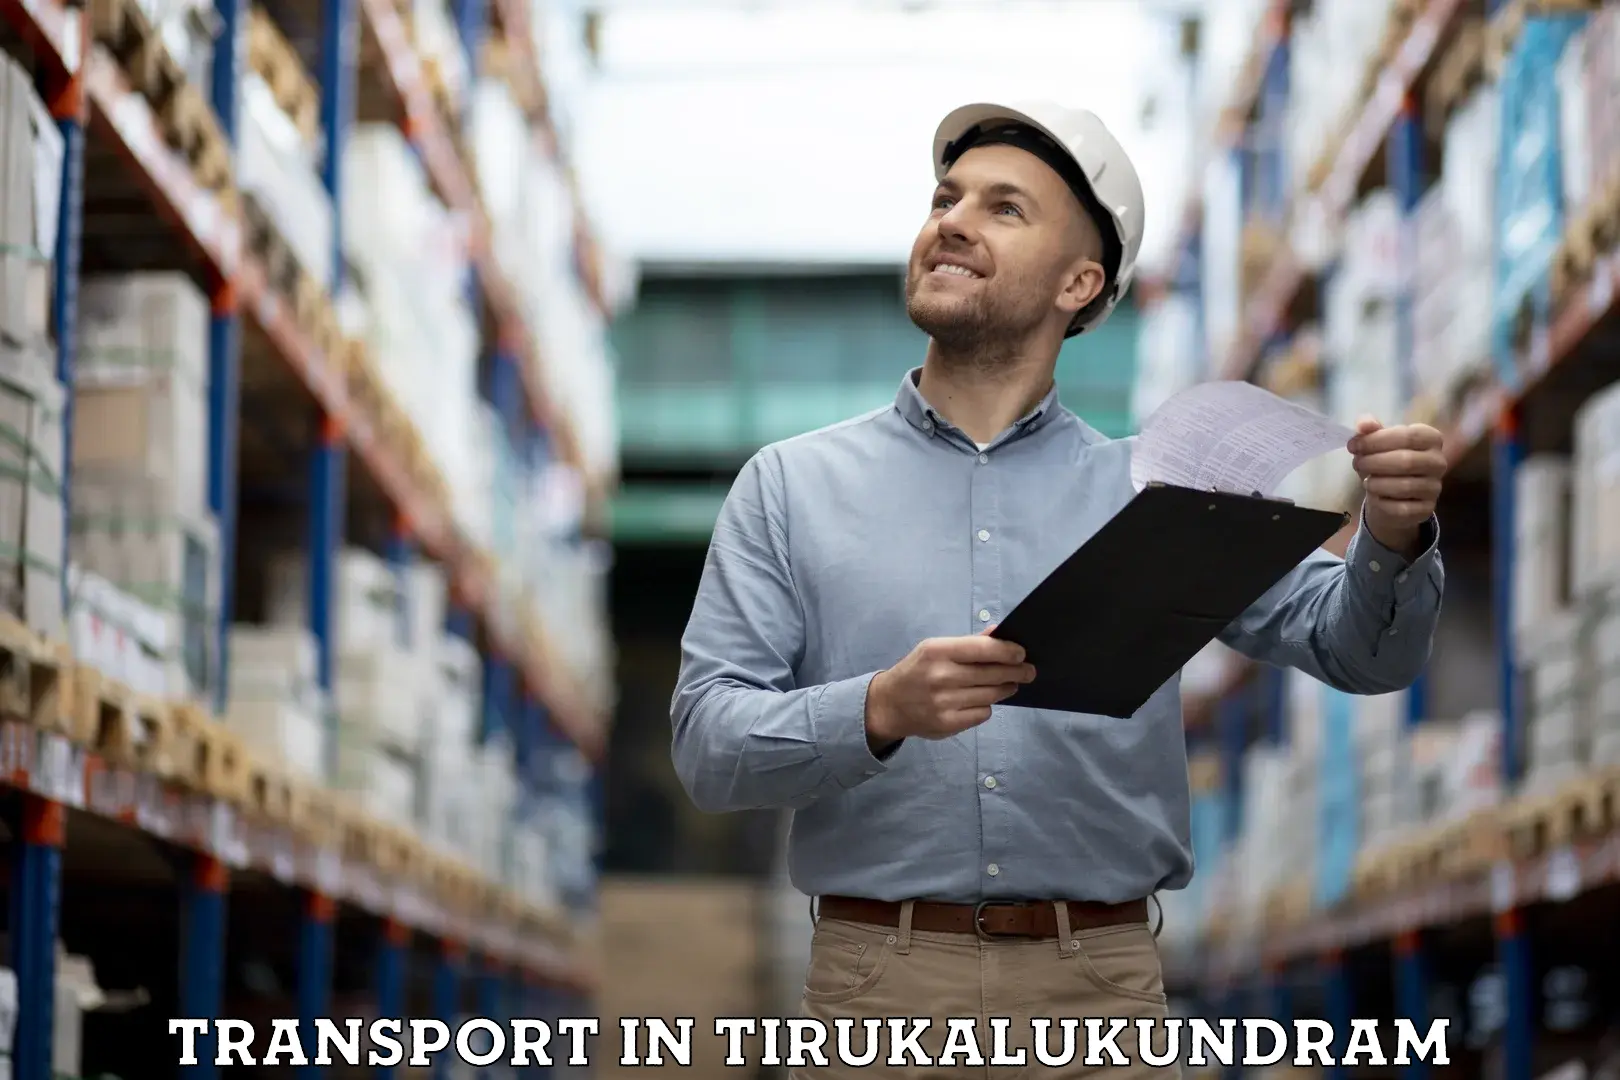 Daily transport service in Tirukalukundram